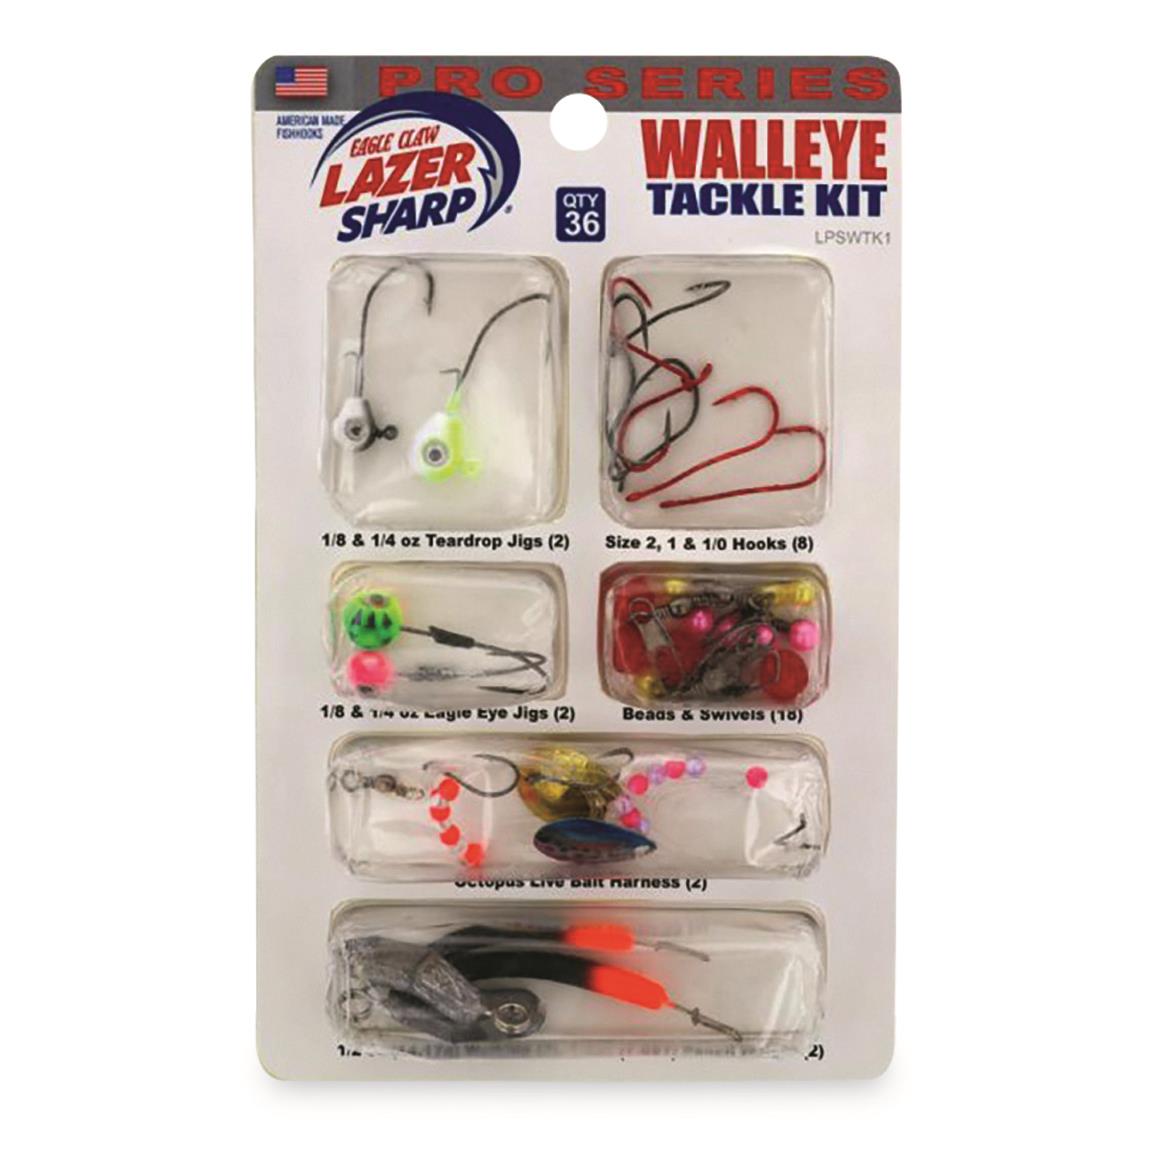 Eagle Claw Lazer Sharp Walleye Tackle Kit, 36 Pieces - 734323